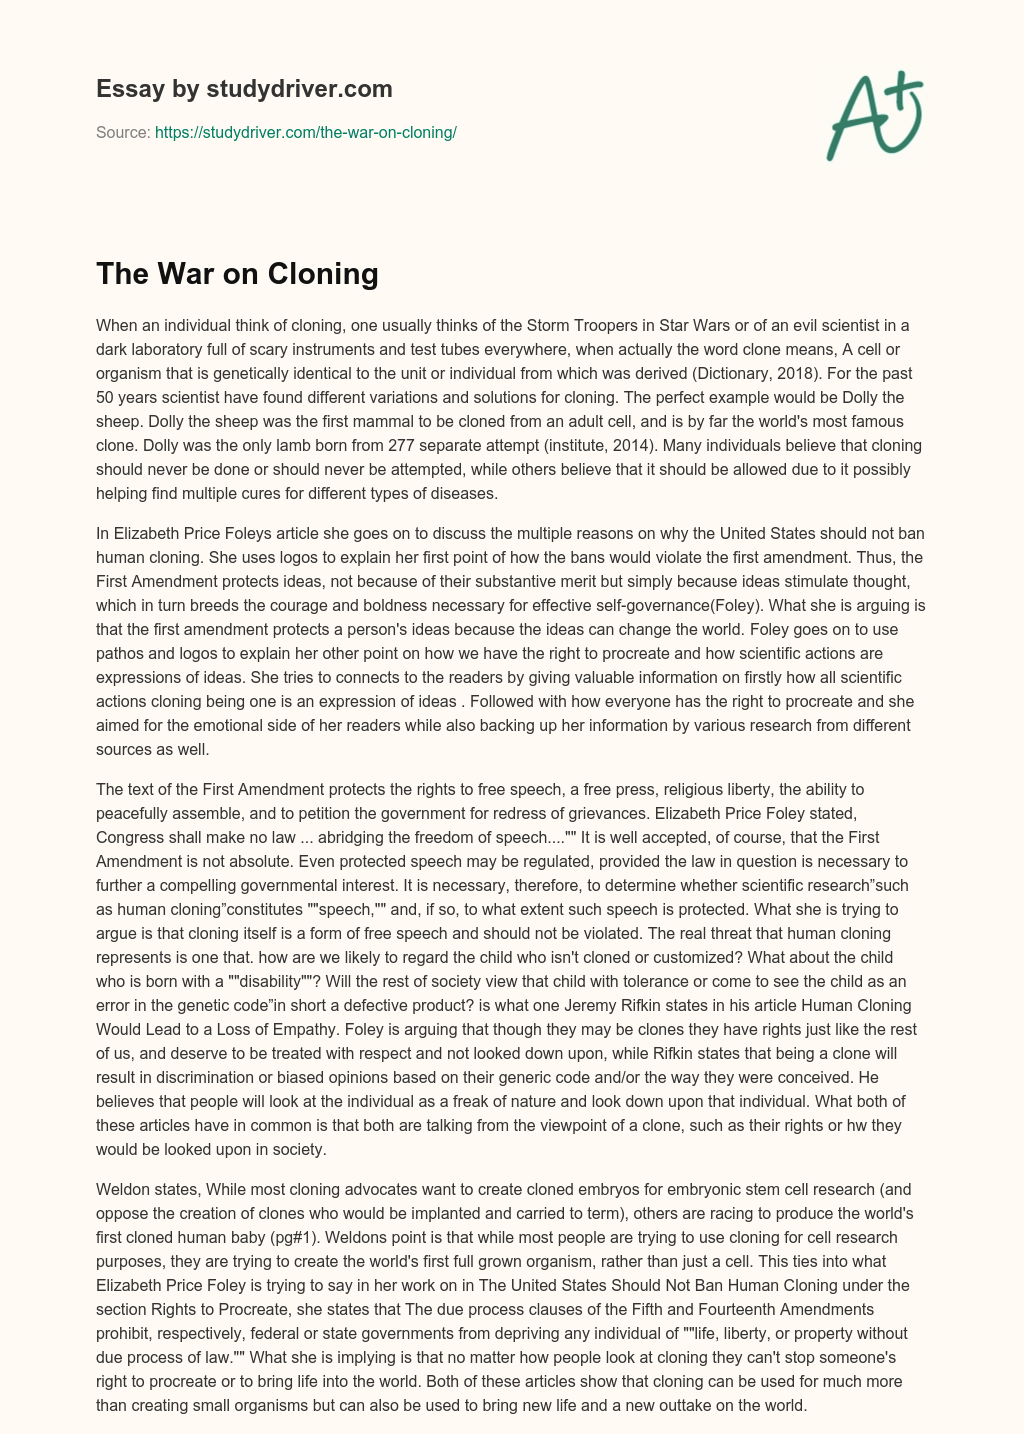 The War on Cloning essay